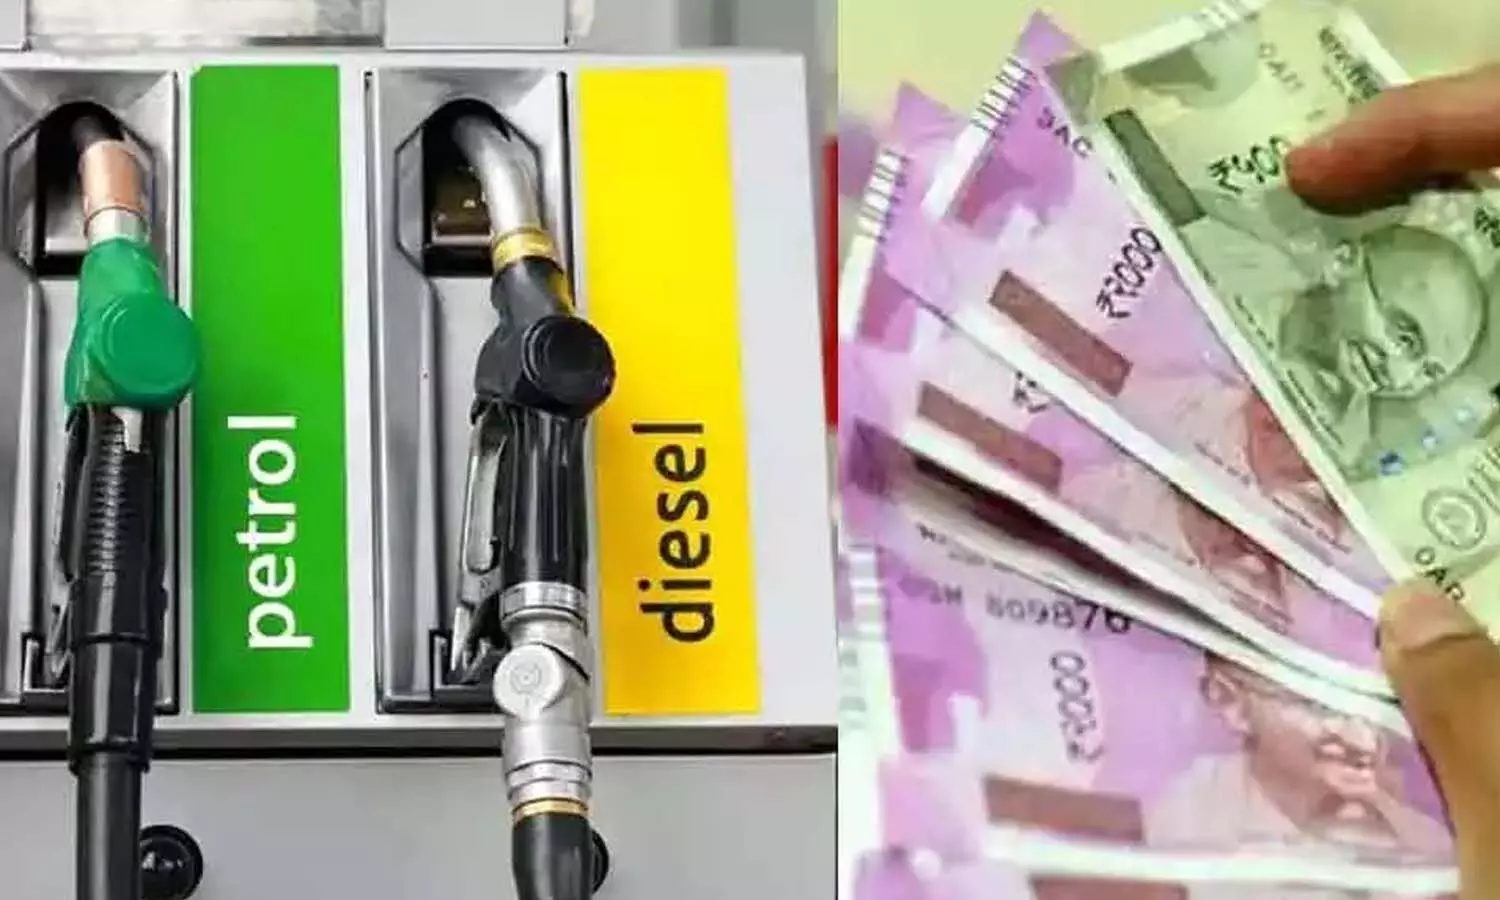 Petrol-Diesel Price Today: Oil companies released new rate of petrol-diesel, know what changed